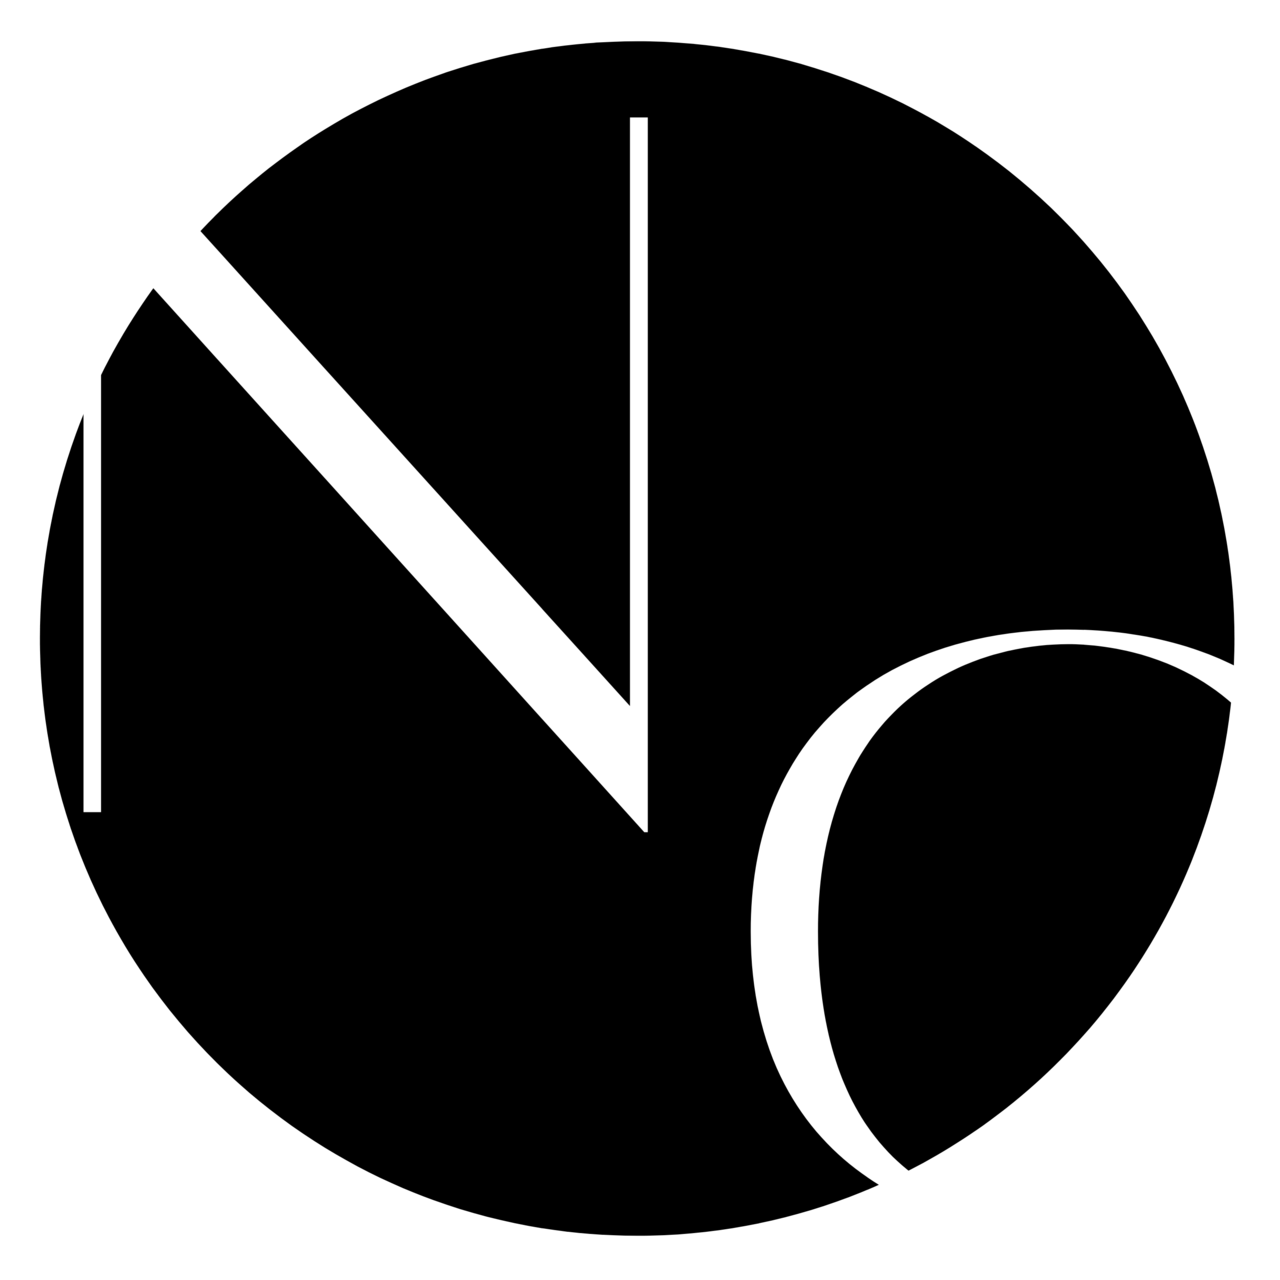 The Noösphere